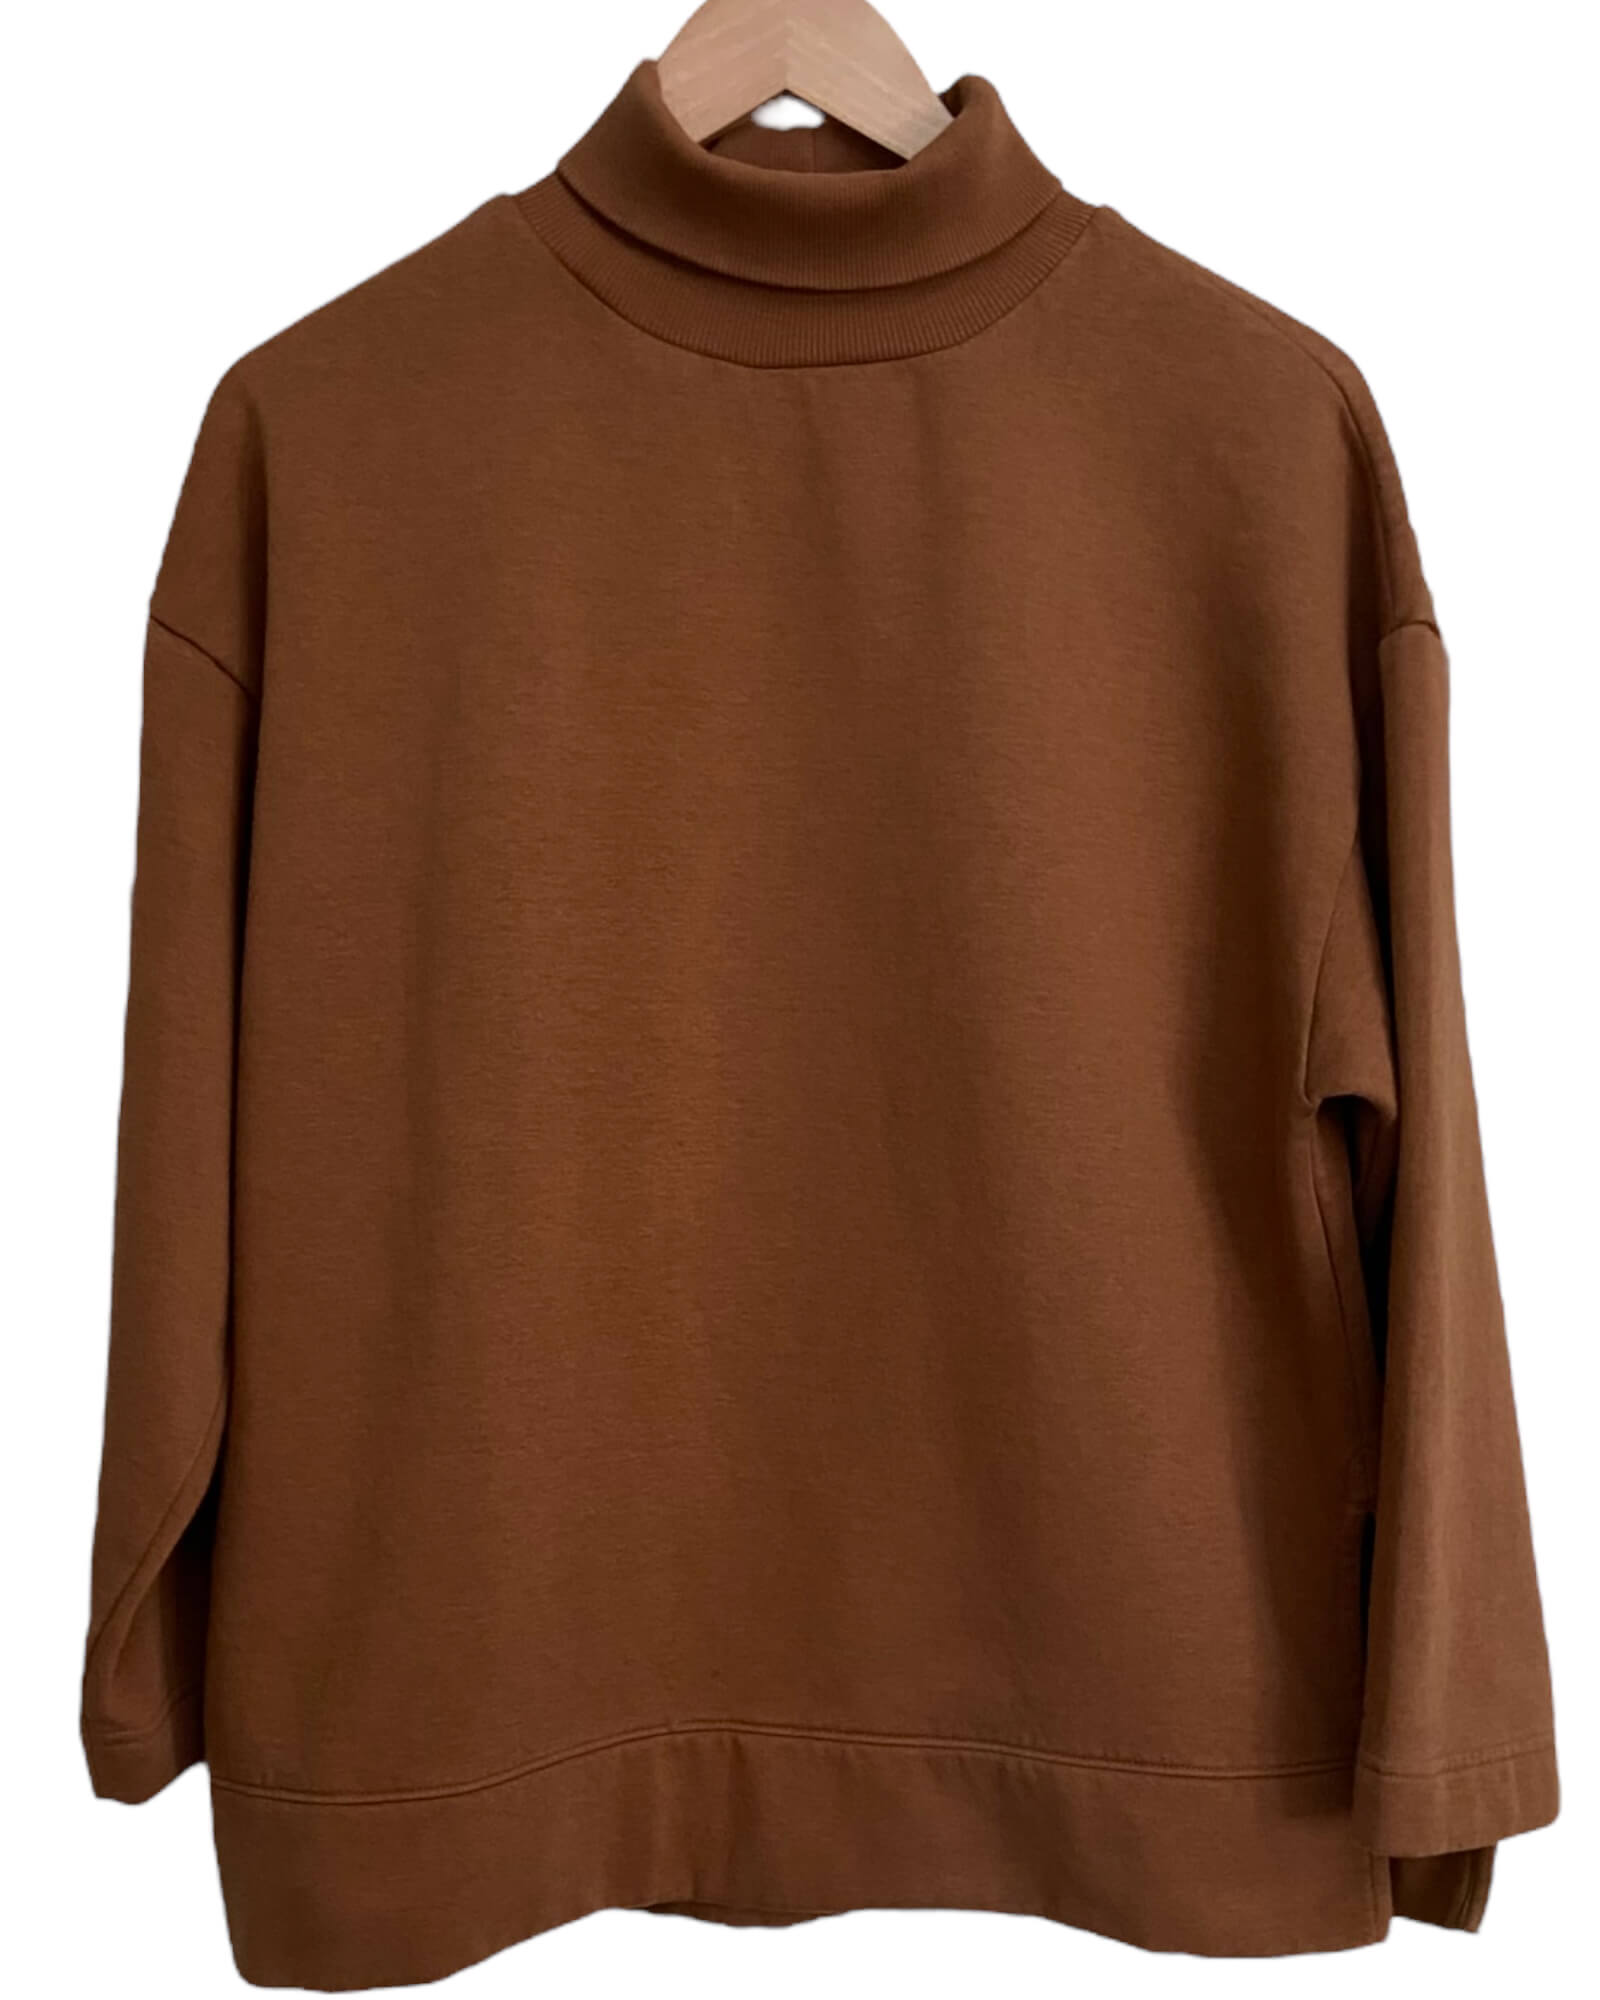 Warm Spring LOU & GREY for LOFT pecan brown turtleneck sweatshirt